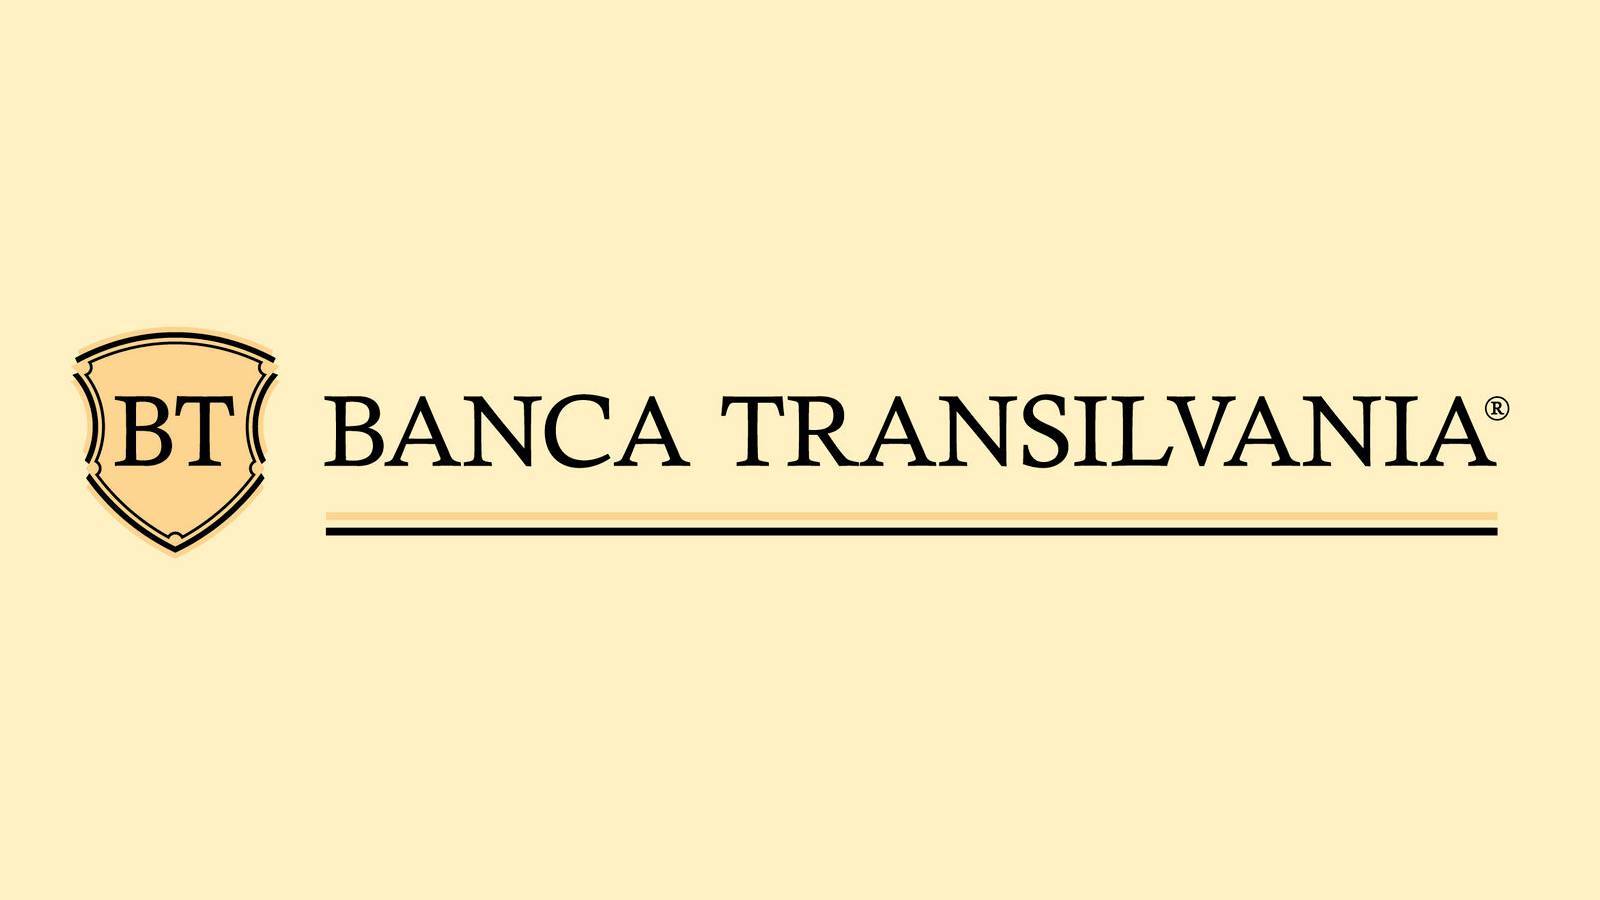 BANCA Transilvania Hotarare Oficiala ULTIM MOMENT Masuri IMPORTANTE Anuntate Romaniei